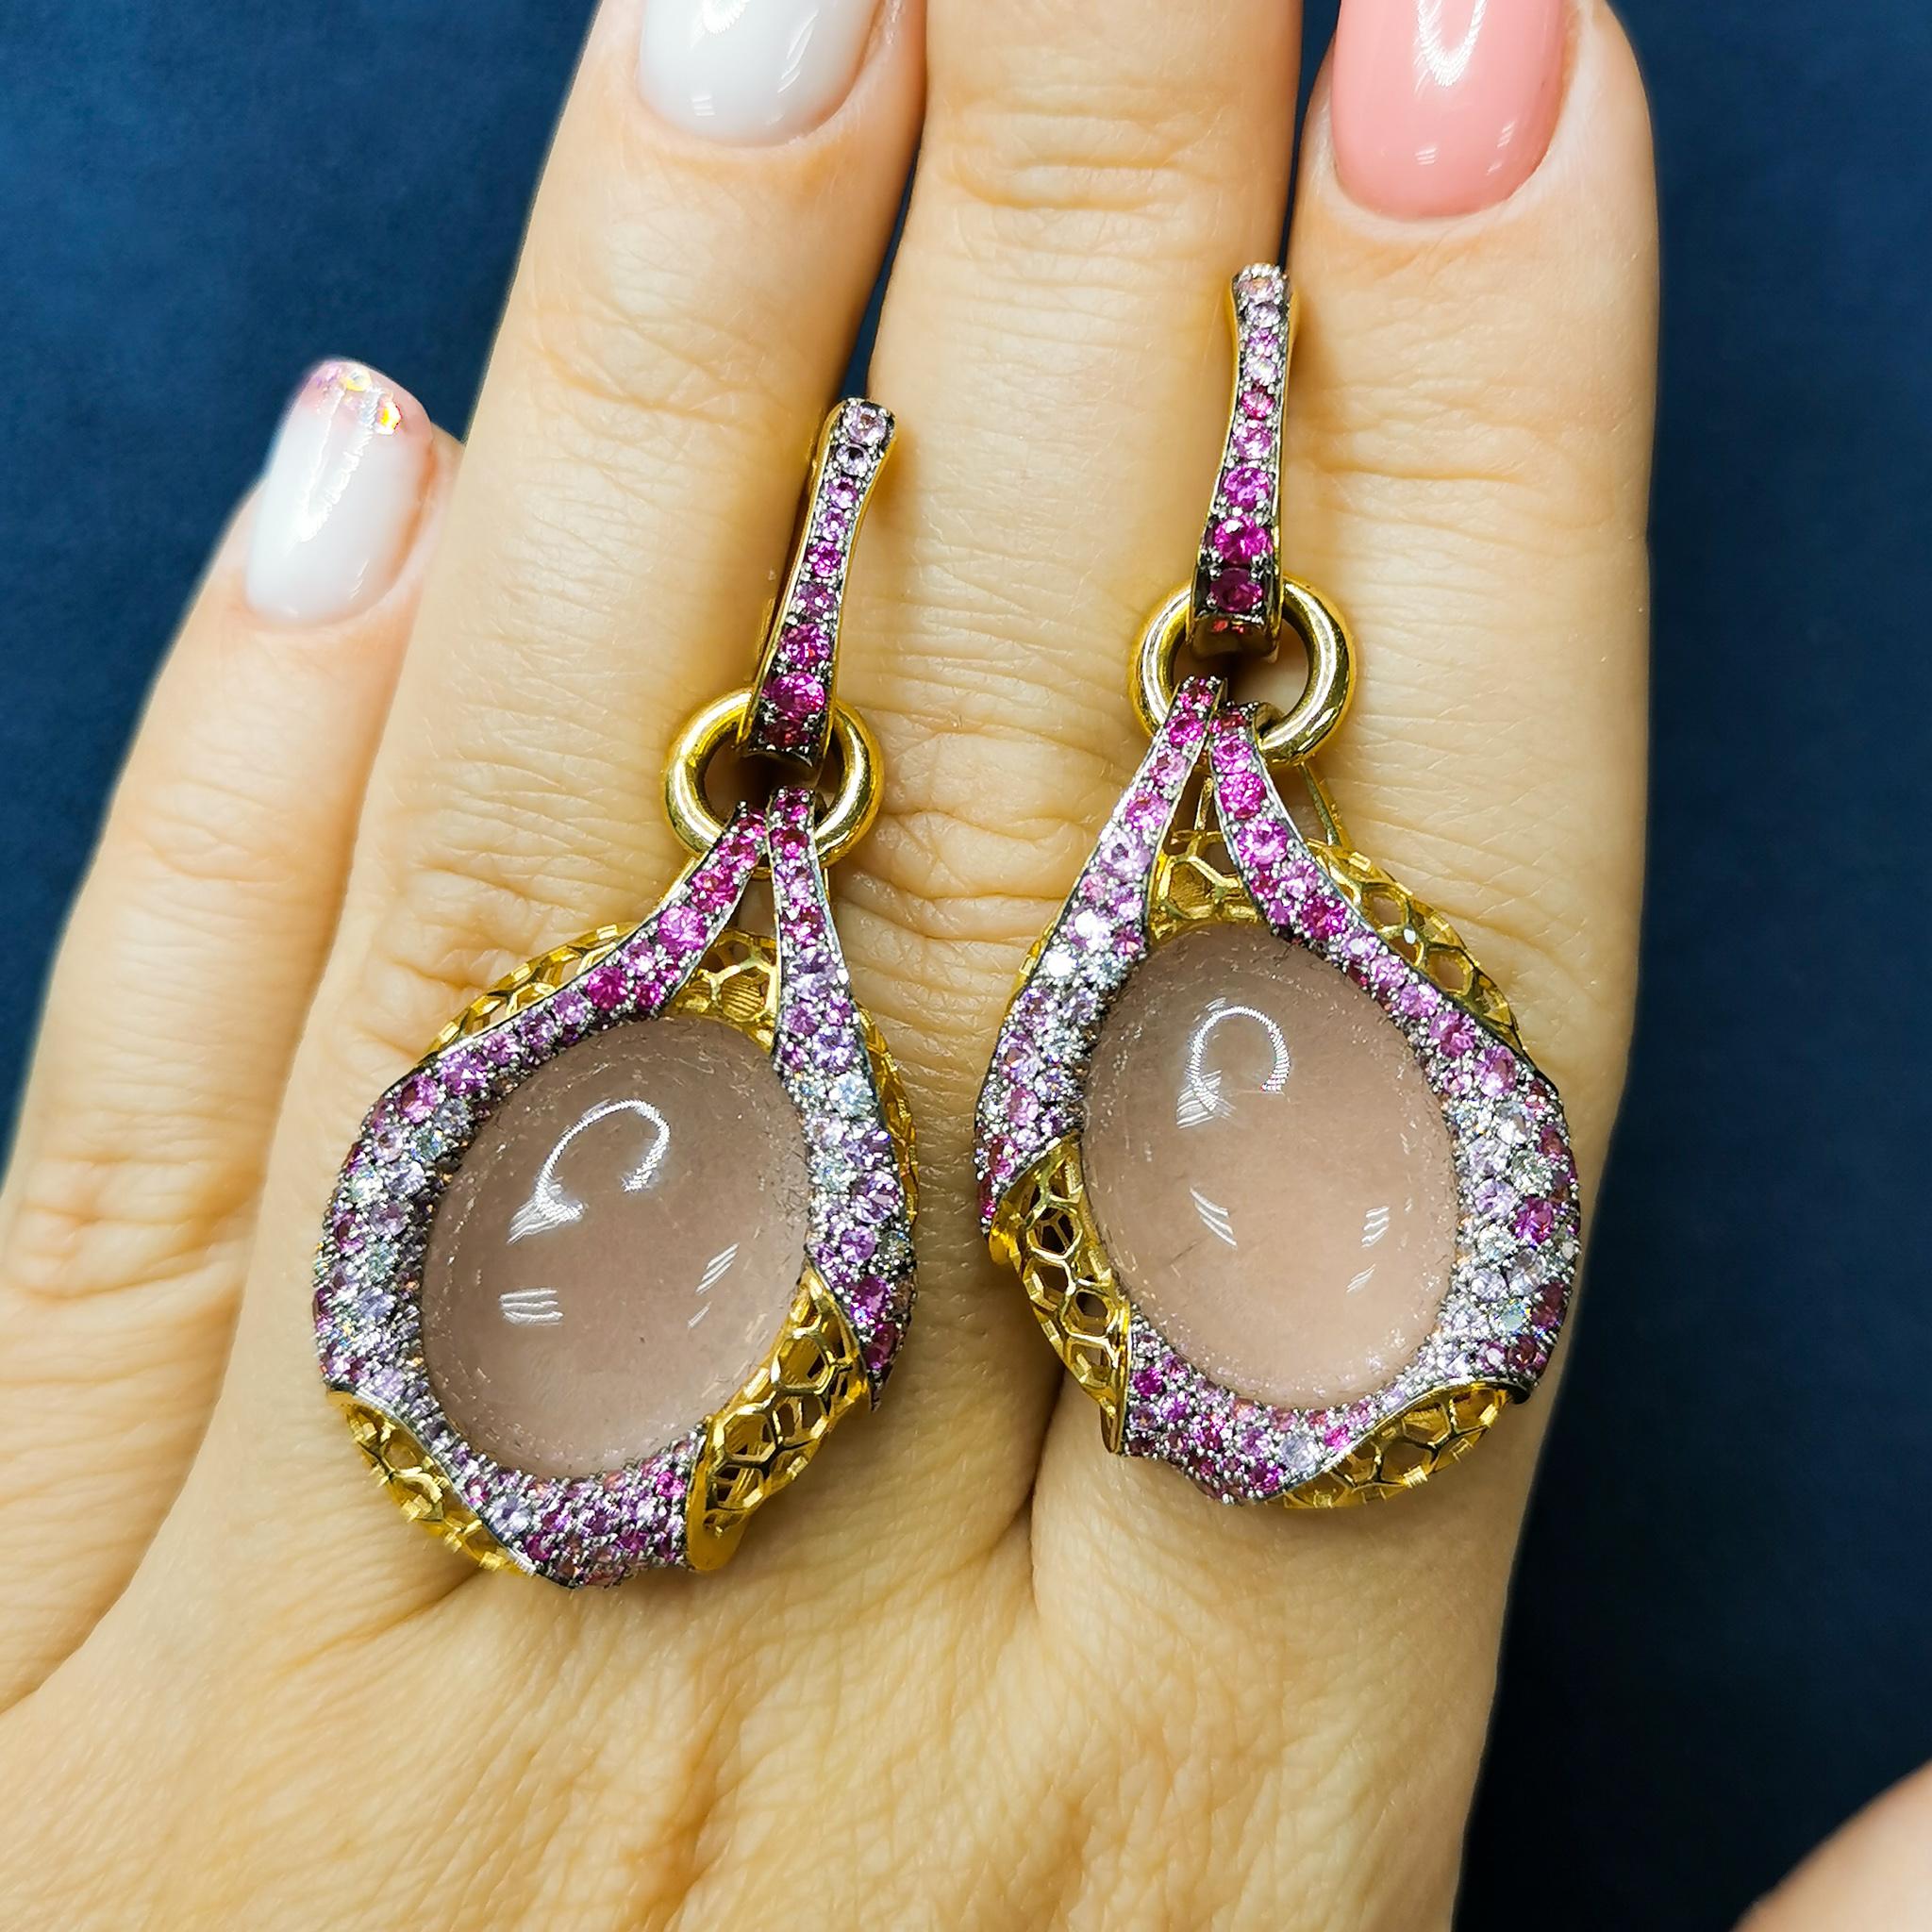 Cabochon Rose Quartz 33.34 Carat Diamonds Pink Sapphires 18 Karat Yellow Gold Earrings For Sale